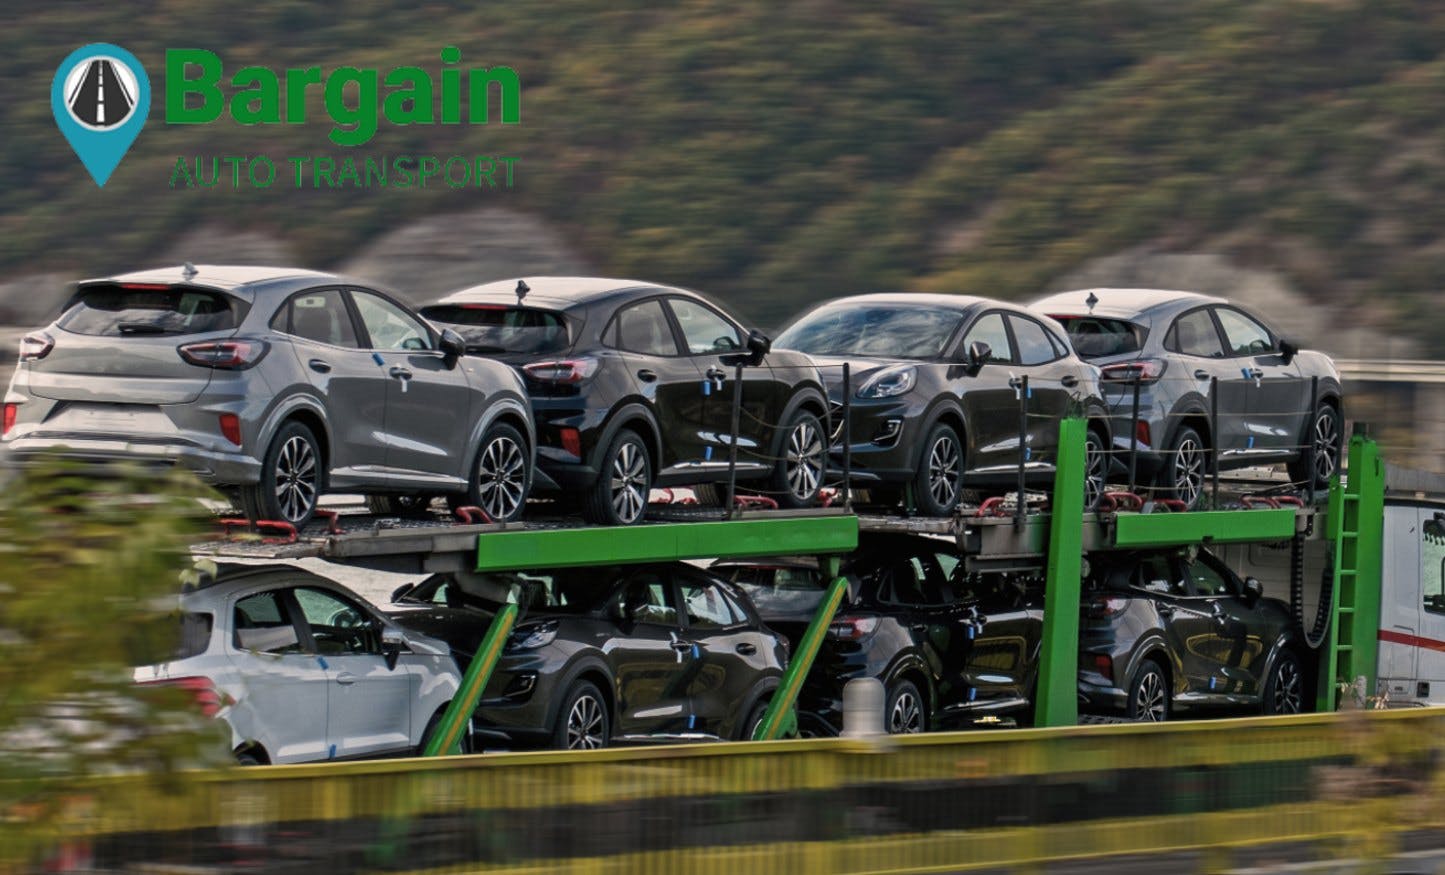 Bargain Auto Transport Review: Get The Best Bid!